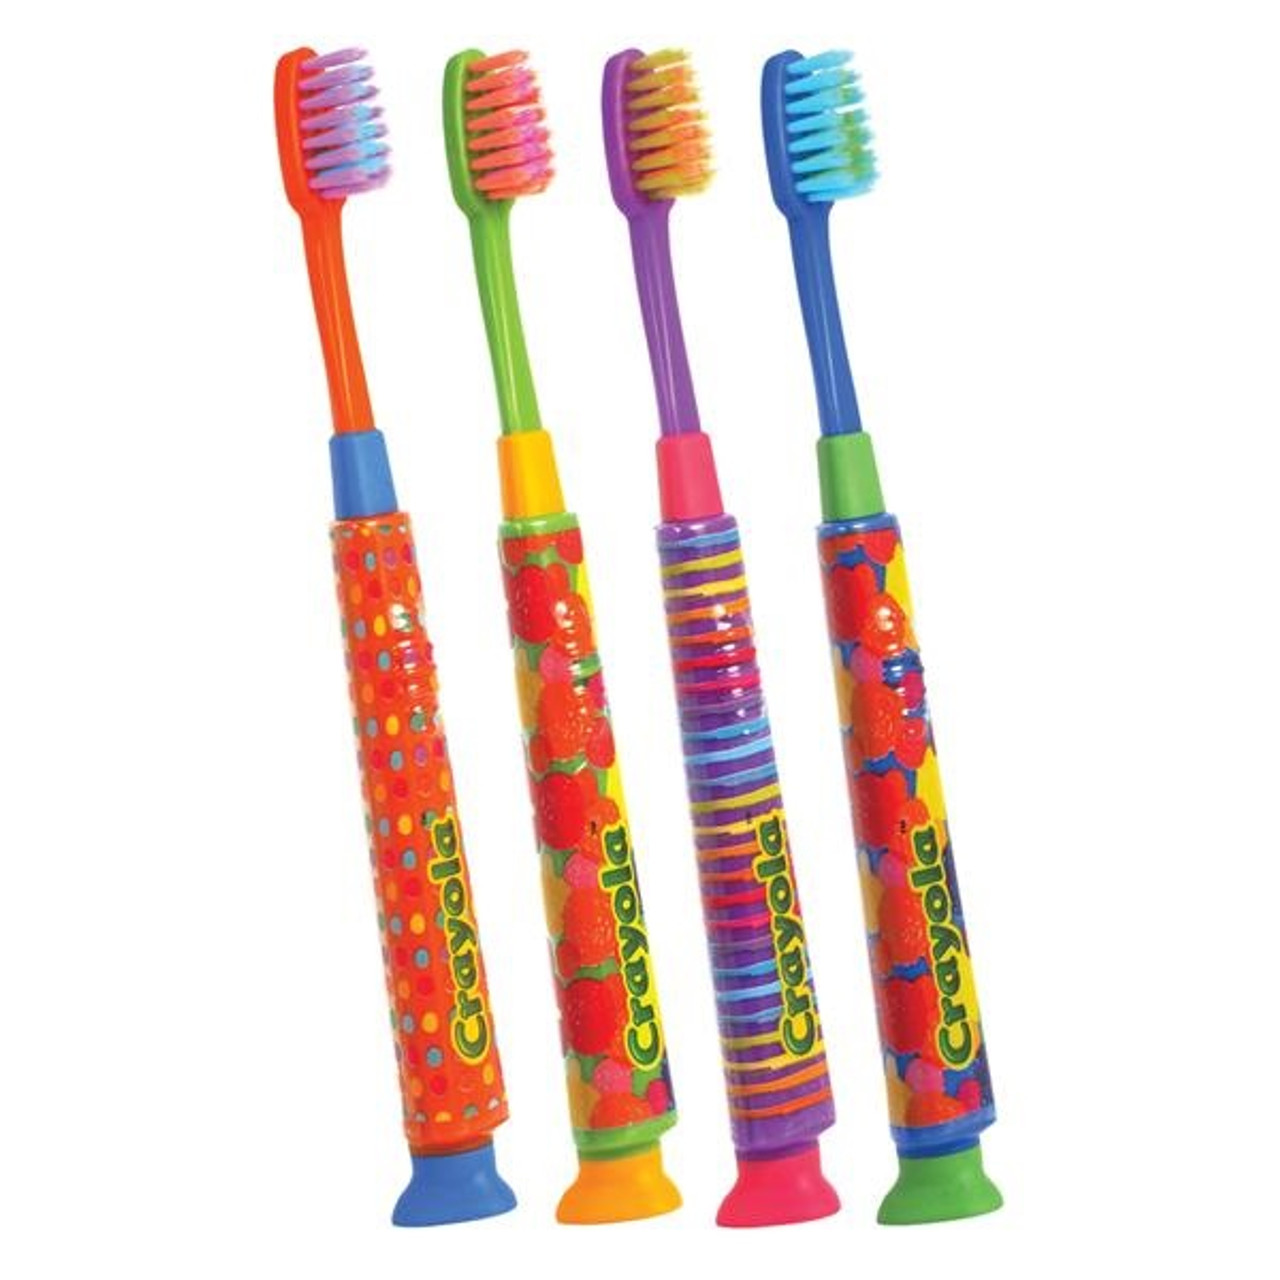 G-U-M Crayola Marker Toothbrush, Soft - 2 pack